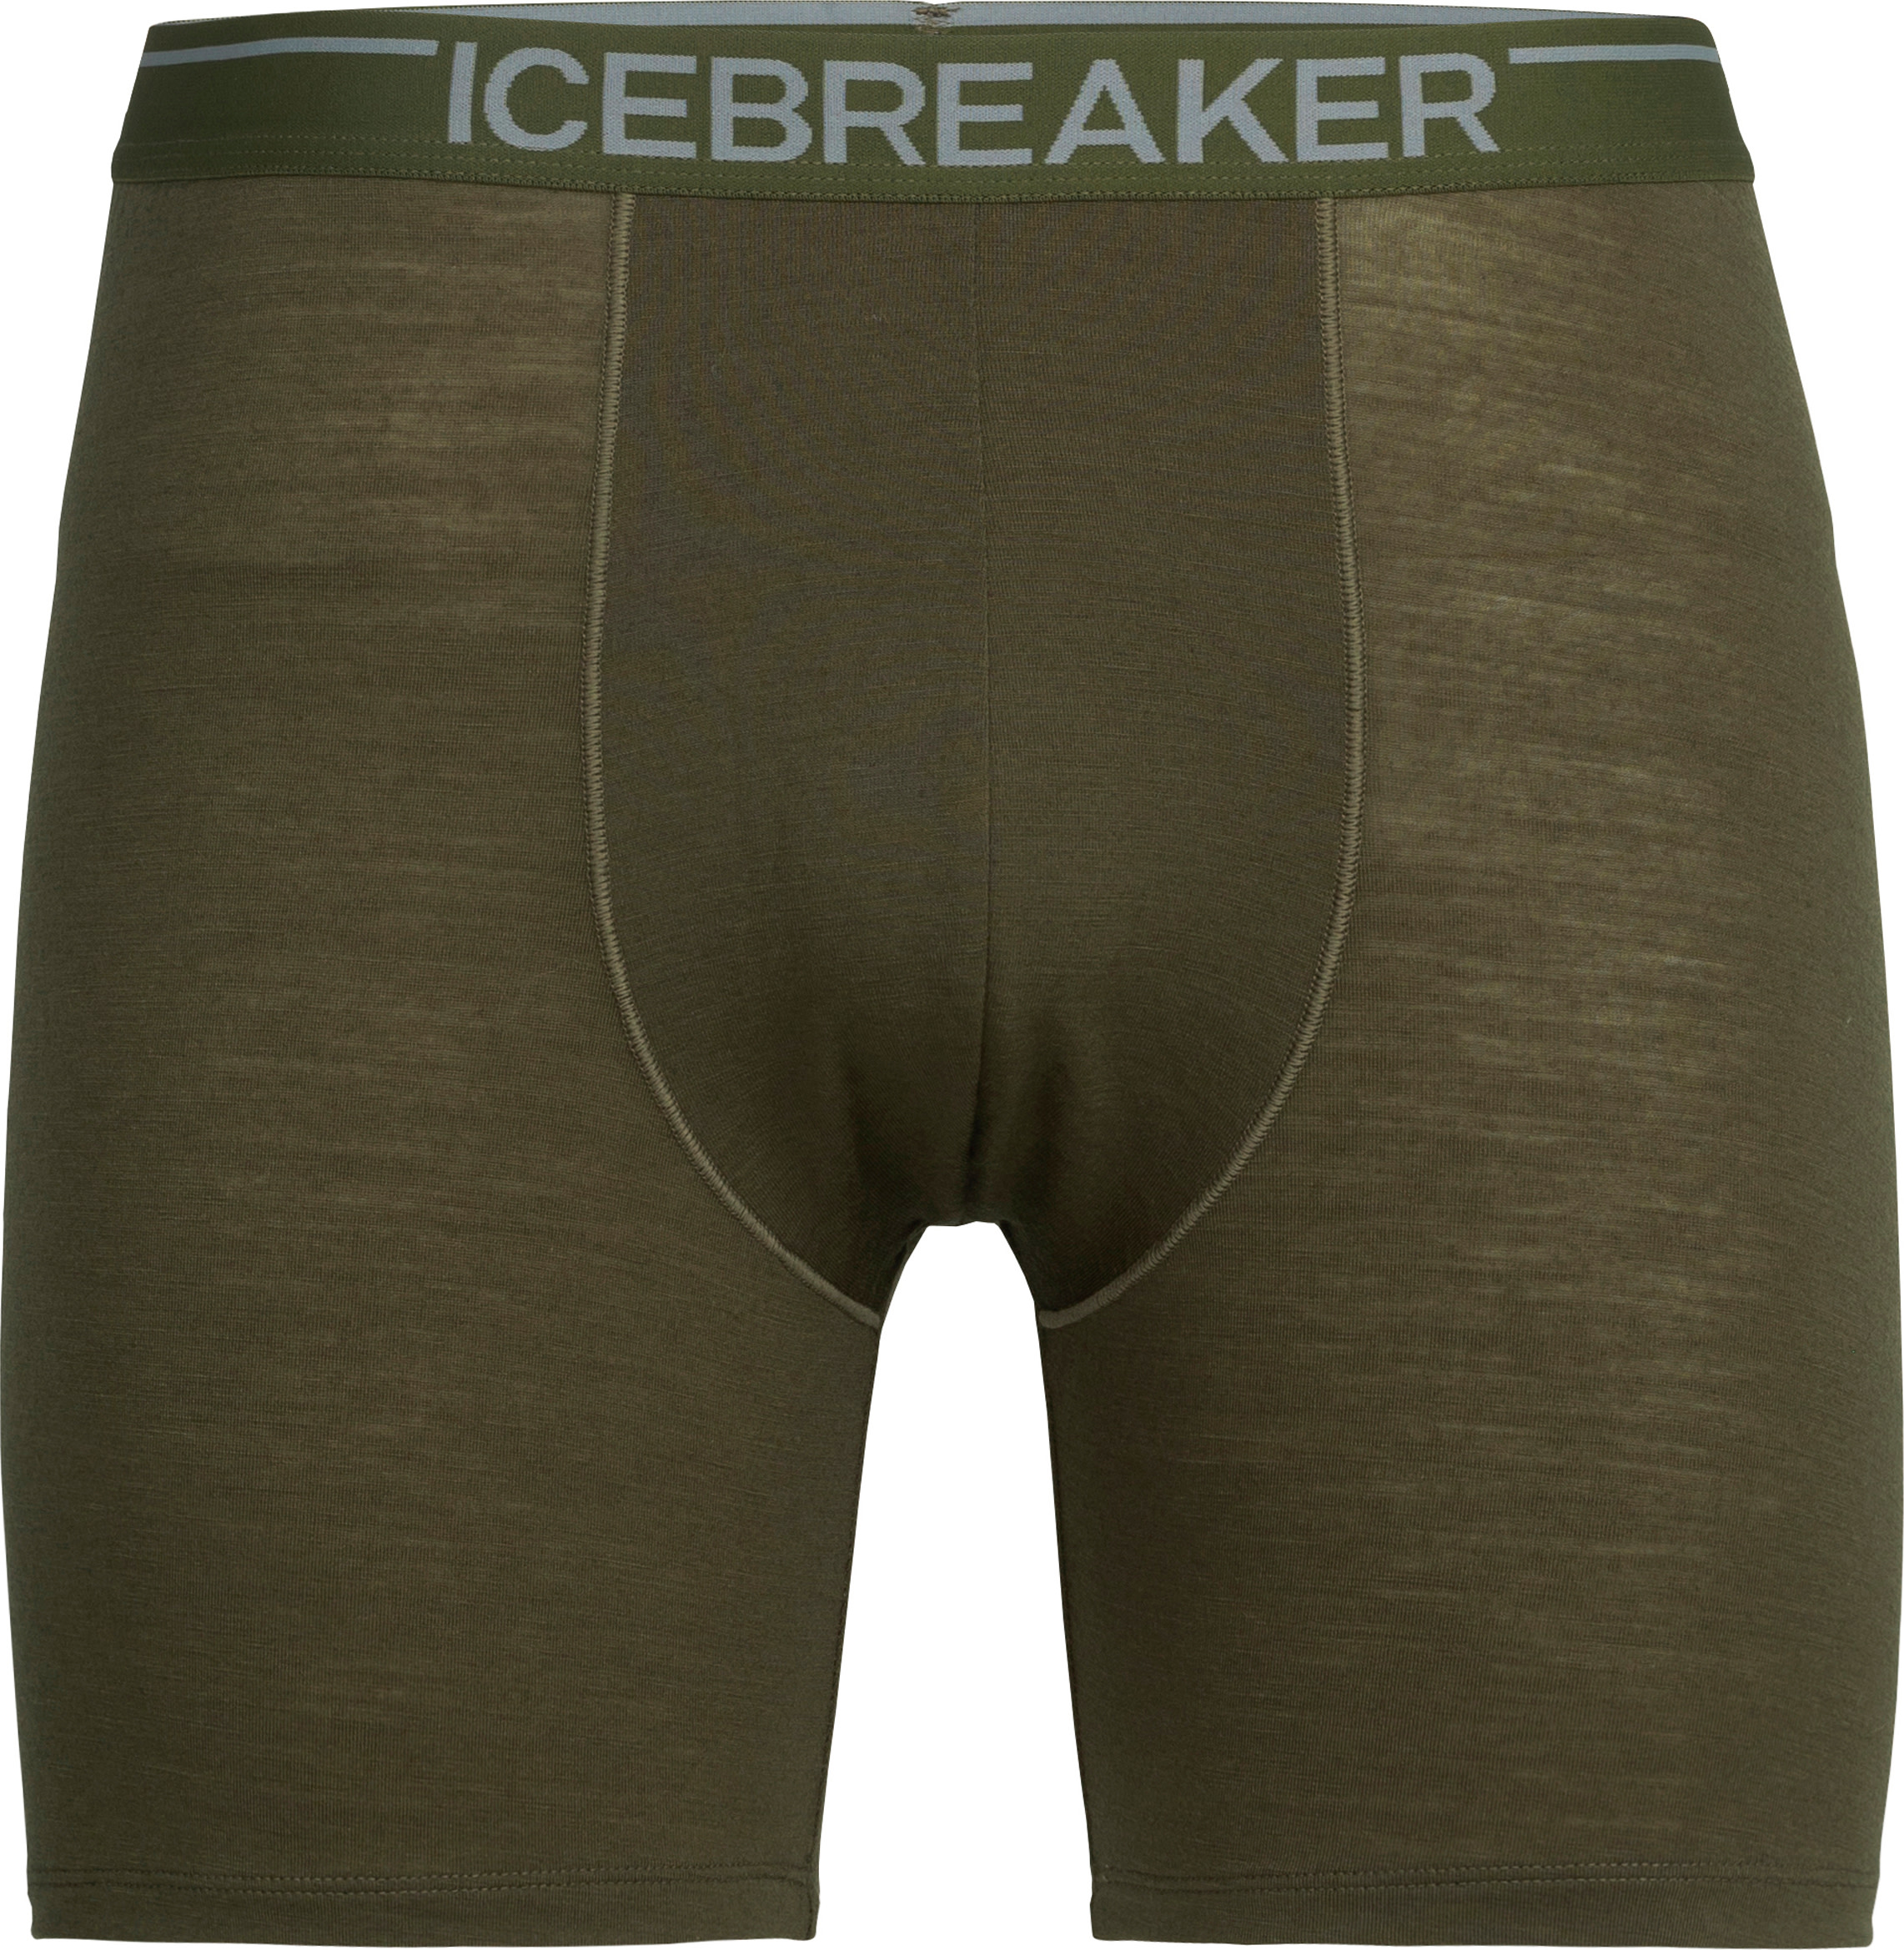 Icebreaker Men’s Anatomica Long Boxers LODEN